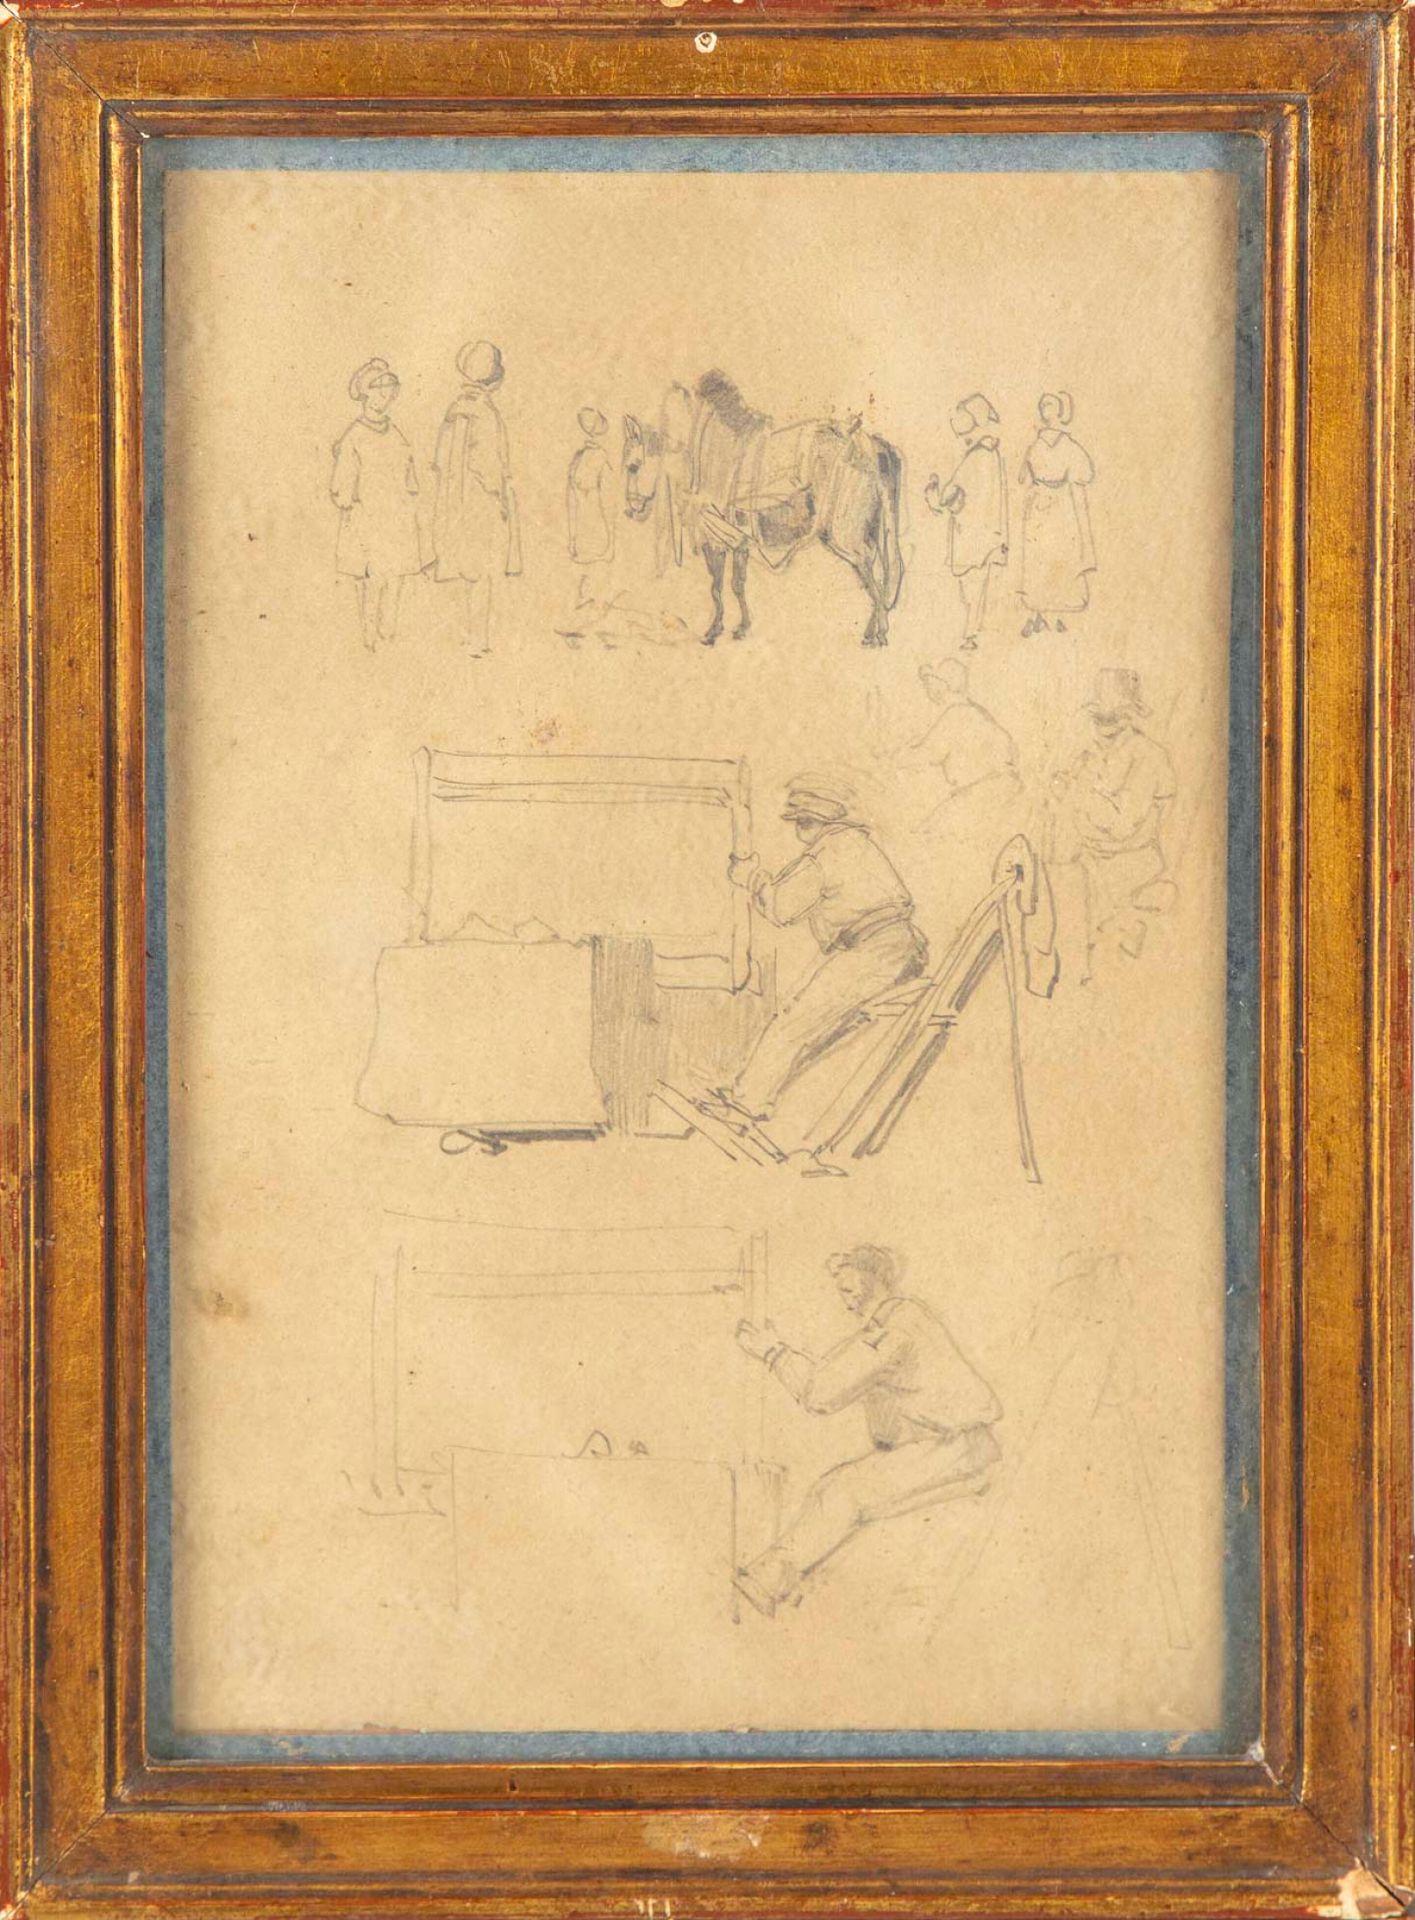 BONNINGTON 理查德-帕克斯-博宁顿（1801-1828）归于

石匠的研究

铅笔画，背面有注解

20.5 x 14 cm

标记